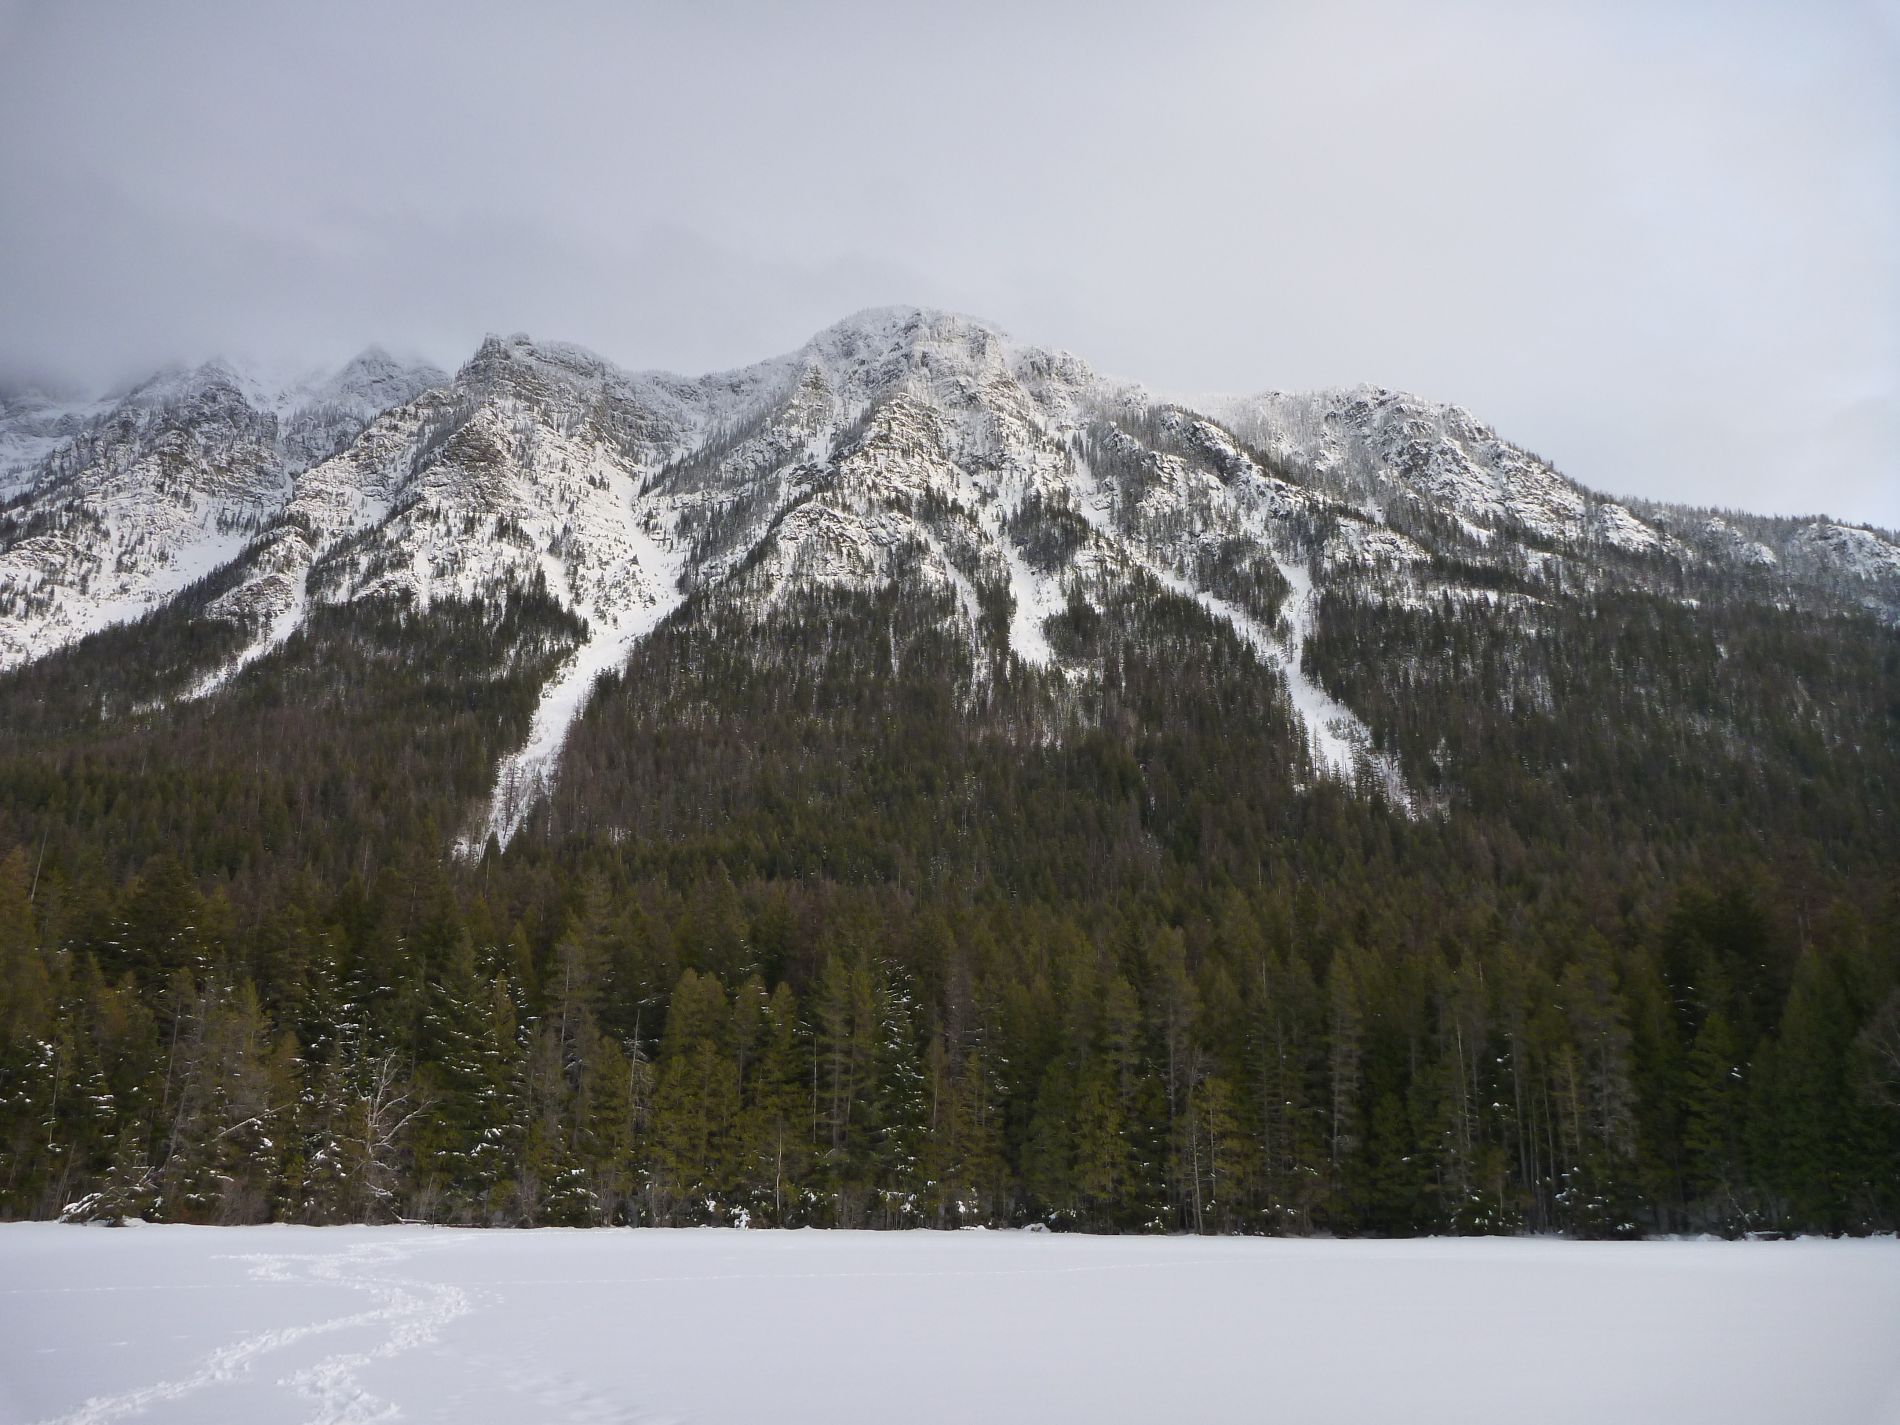 Johns Lake with mountains, snow